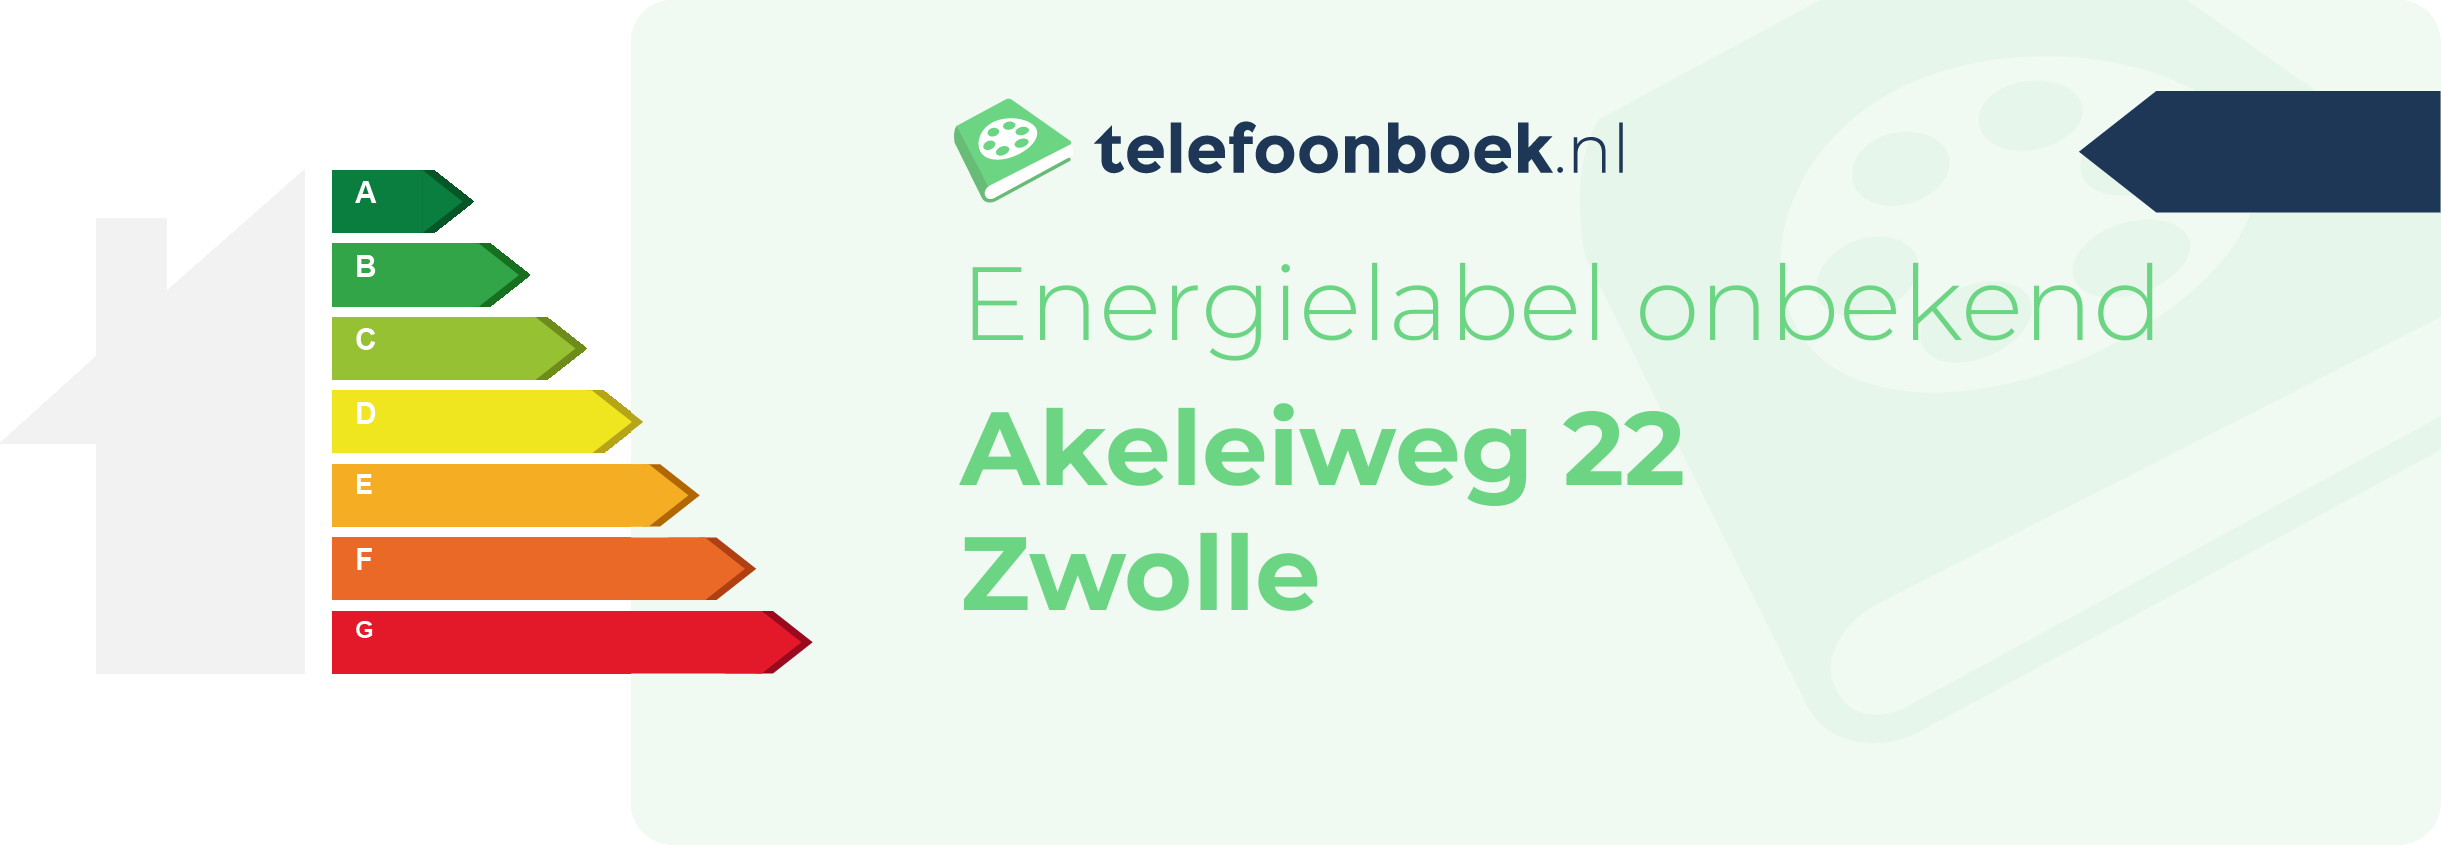 Energielabel Akeleiweg 22 Zwolle